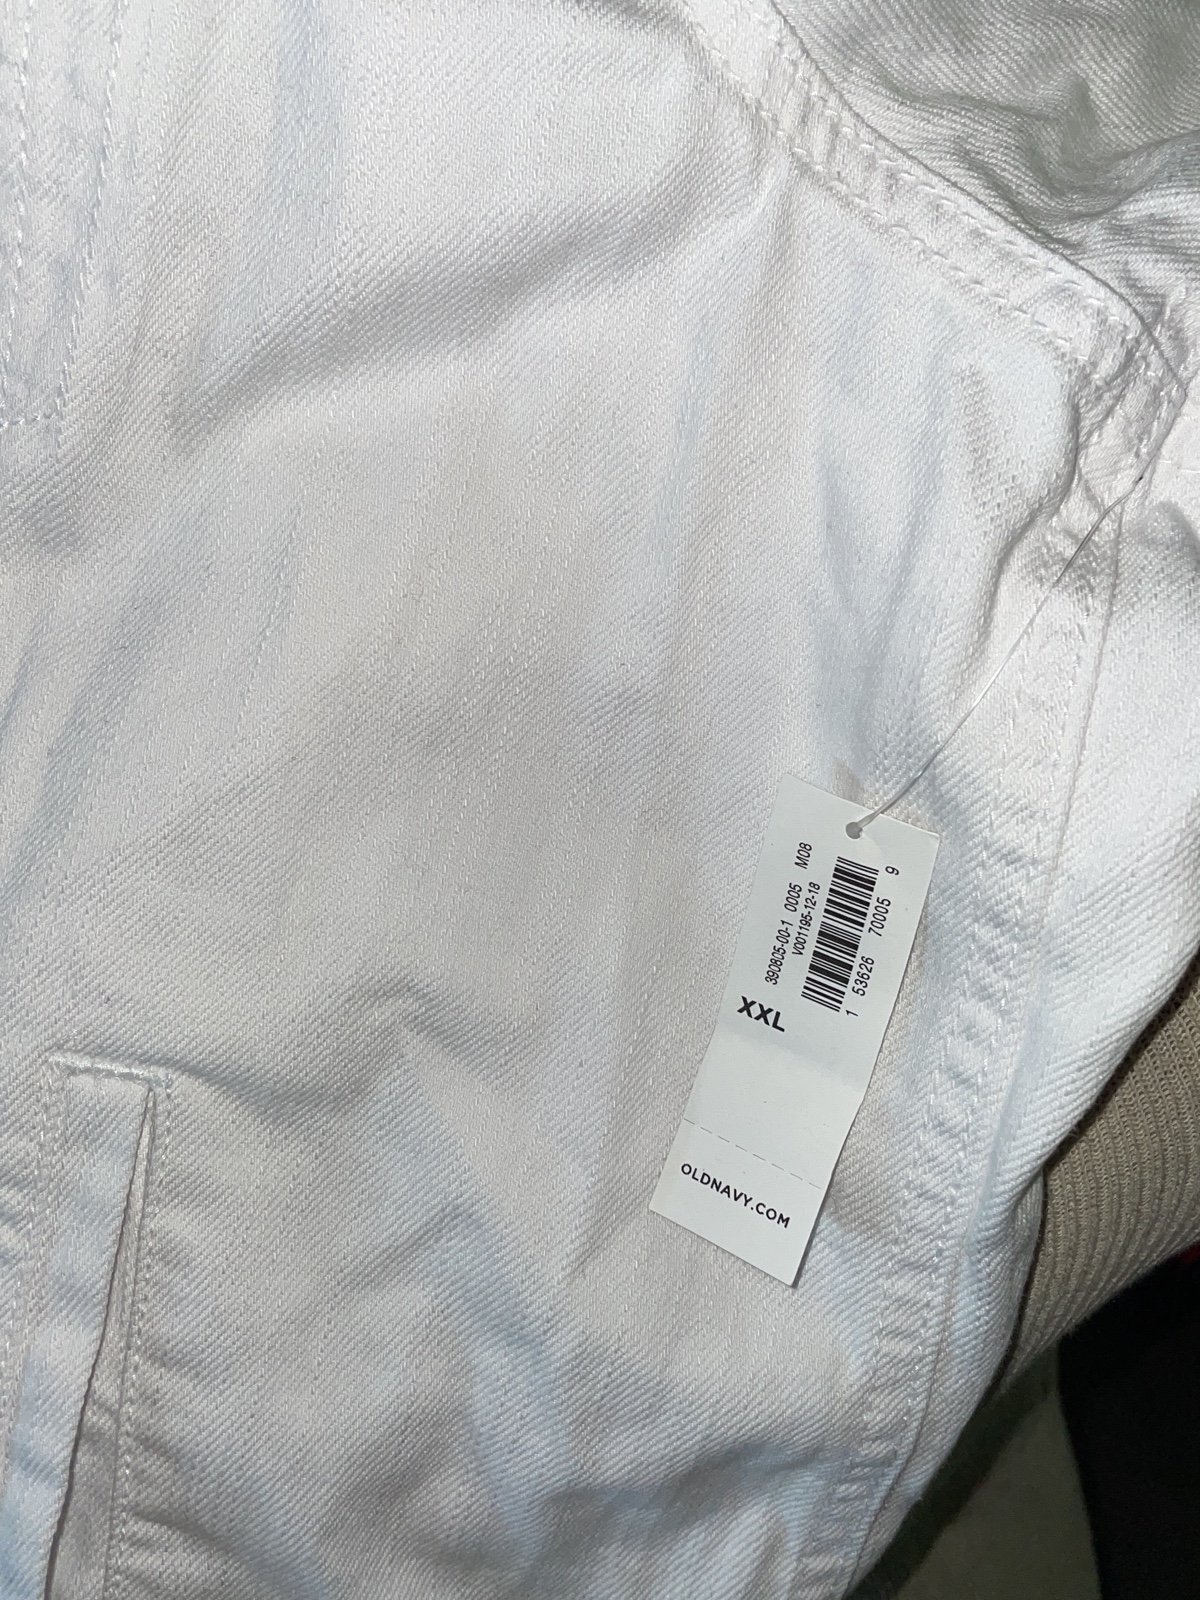 Stylish White jean woman’s Jacket k8dCBayN1 New Style